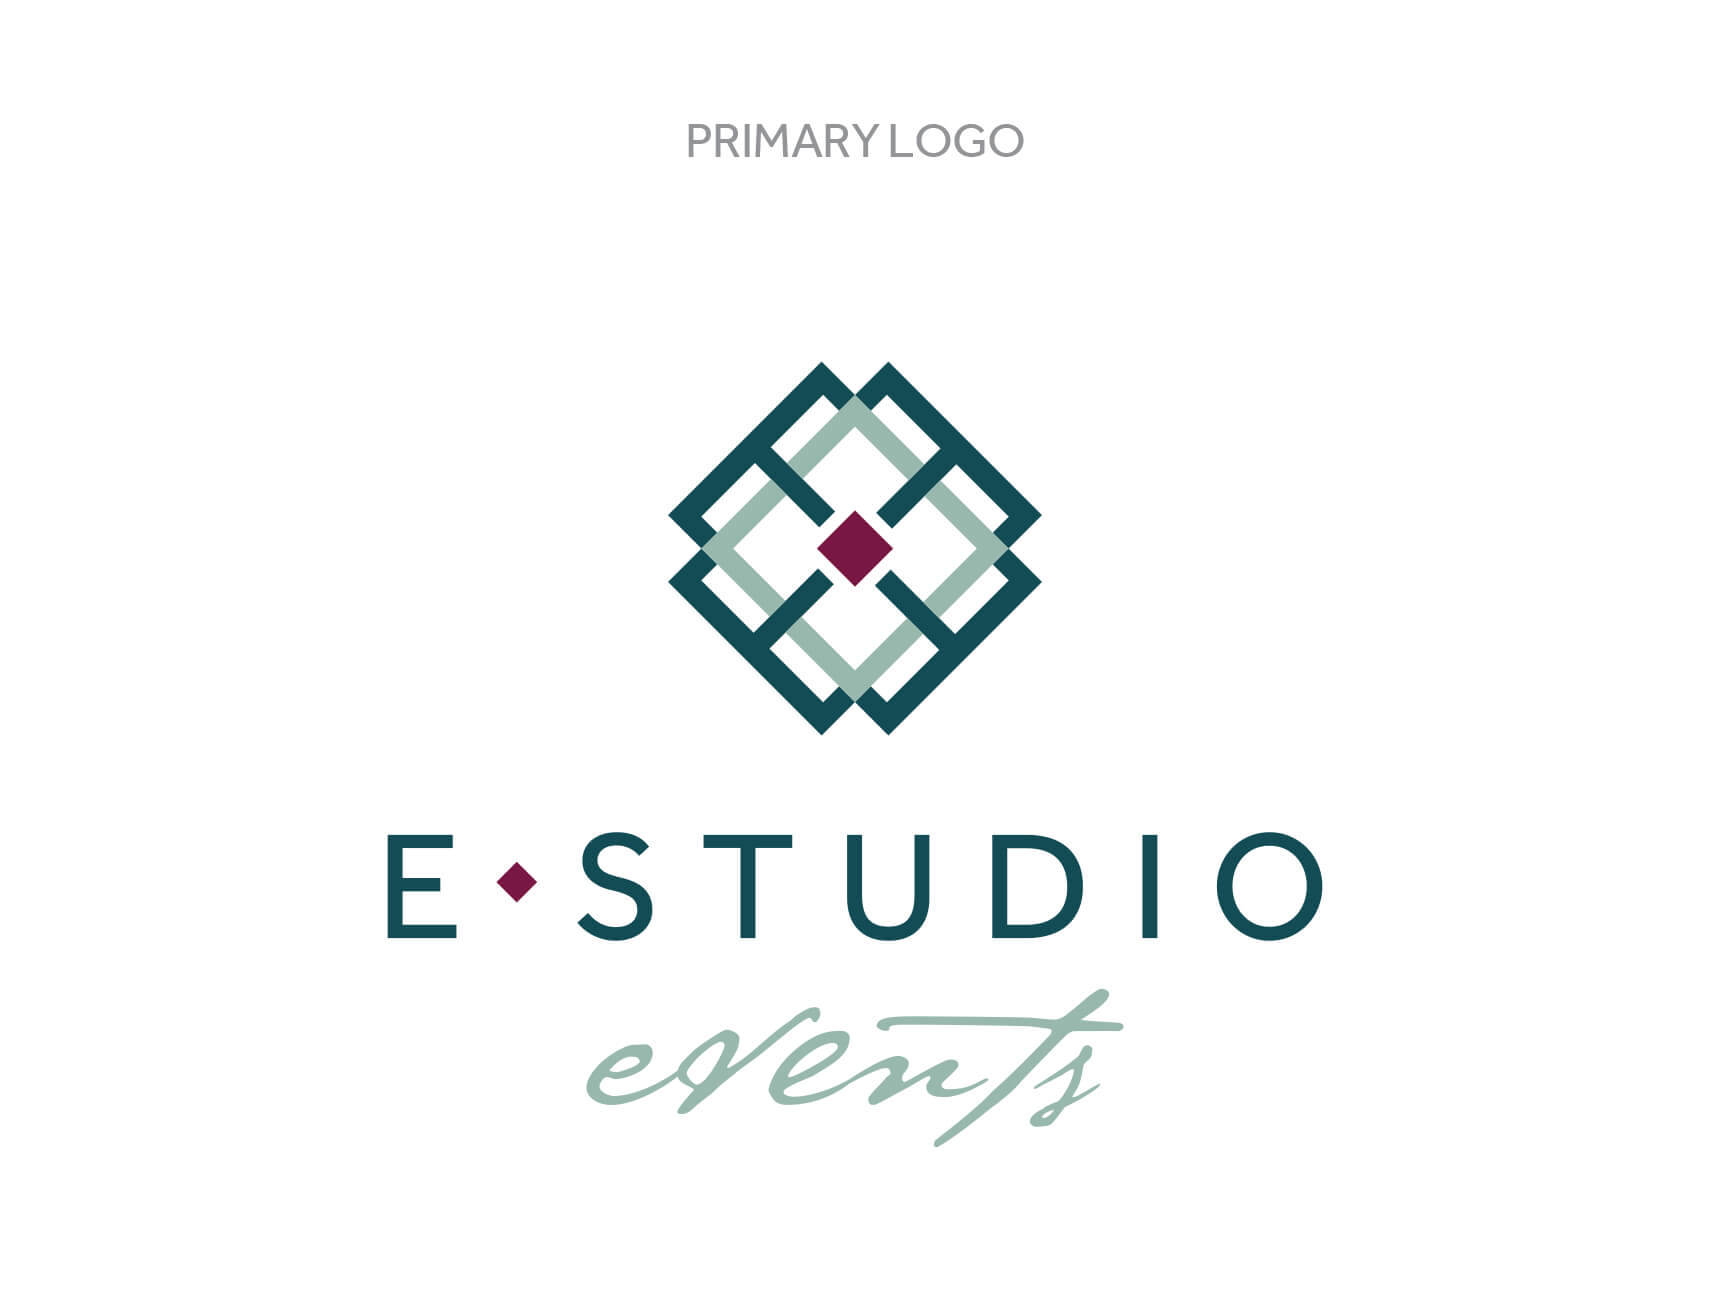 E Studio Events Primary Logo